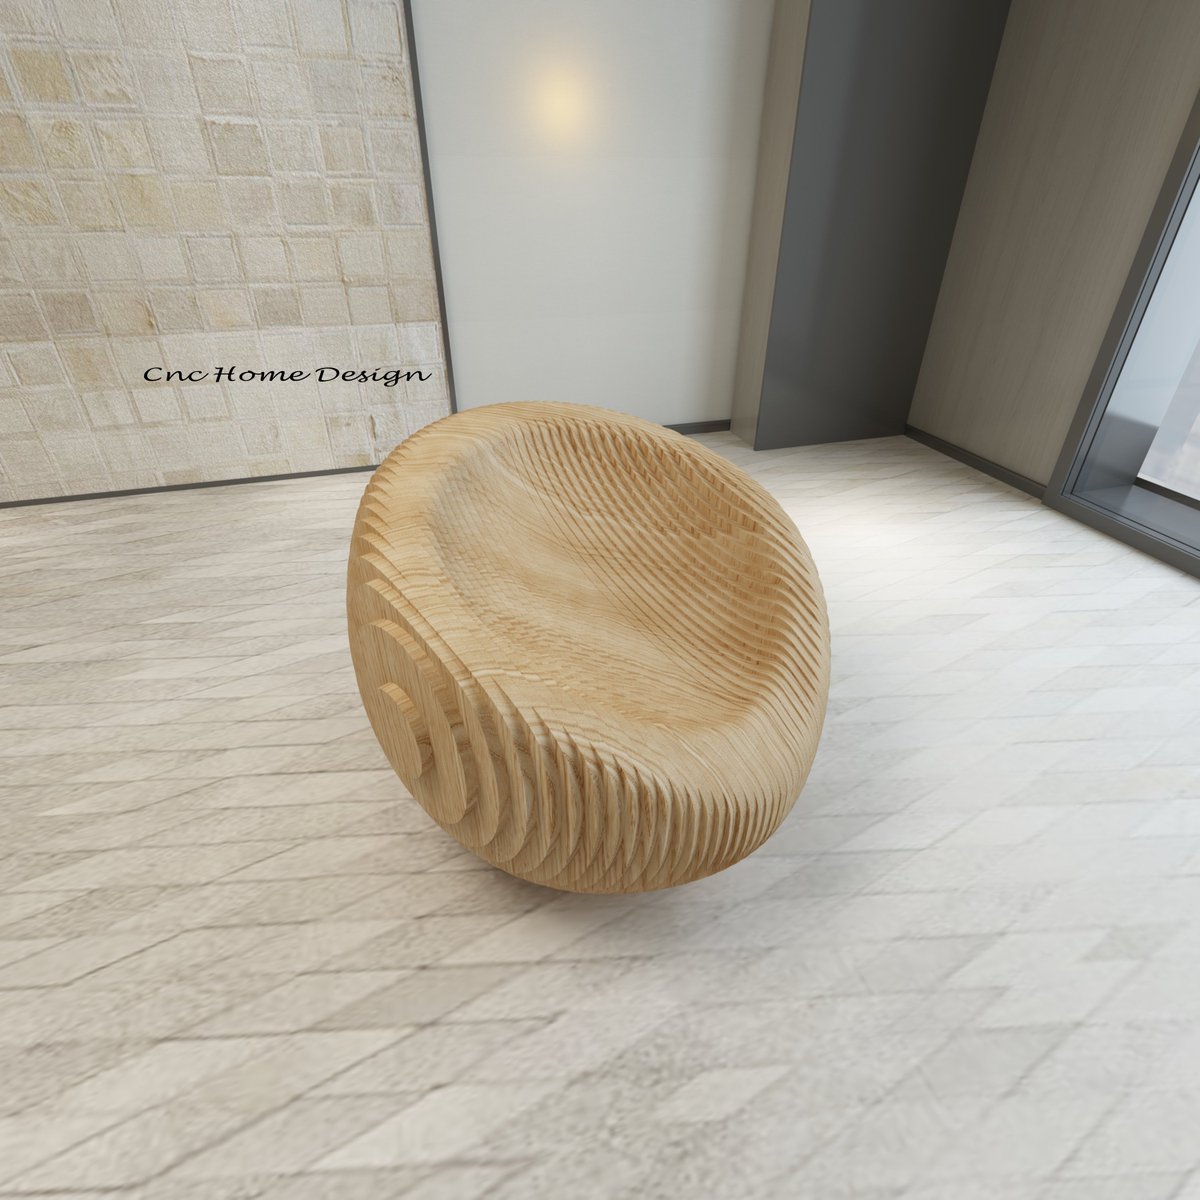 Parametric_Chair-003
Chair Size
Width  720
Depth  720
Height  630
#parametric
#cncdesigner
#parametricart
#cnchomedesign
#parametricdesign
#parametric_design
#parametricfurniture
#plywoodfurniture
#furnituredesign
#cncwoodworking
#wooddesign
#furniture
#woodwork
#plywood
#design